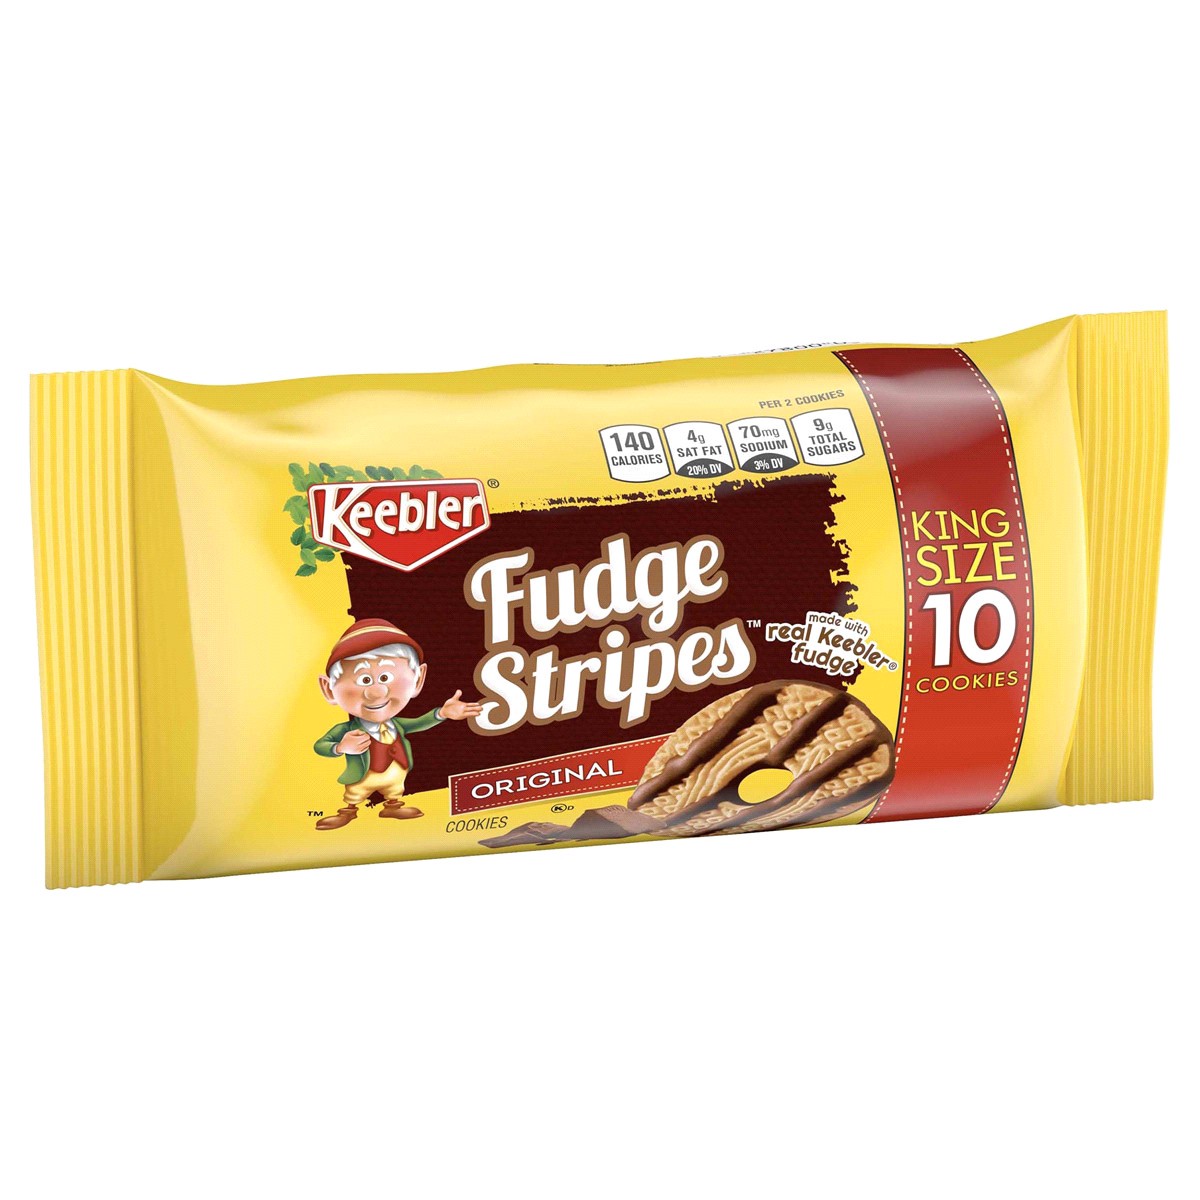 slide 16 of 29, Keeber Fudge Stripes Original King Size Cookies 10Ct, 4.75 oz